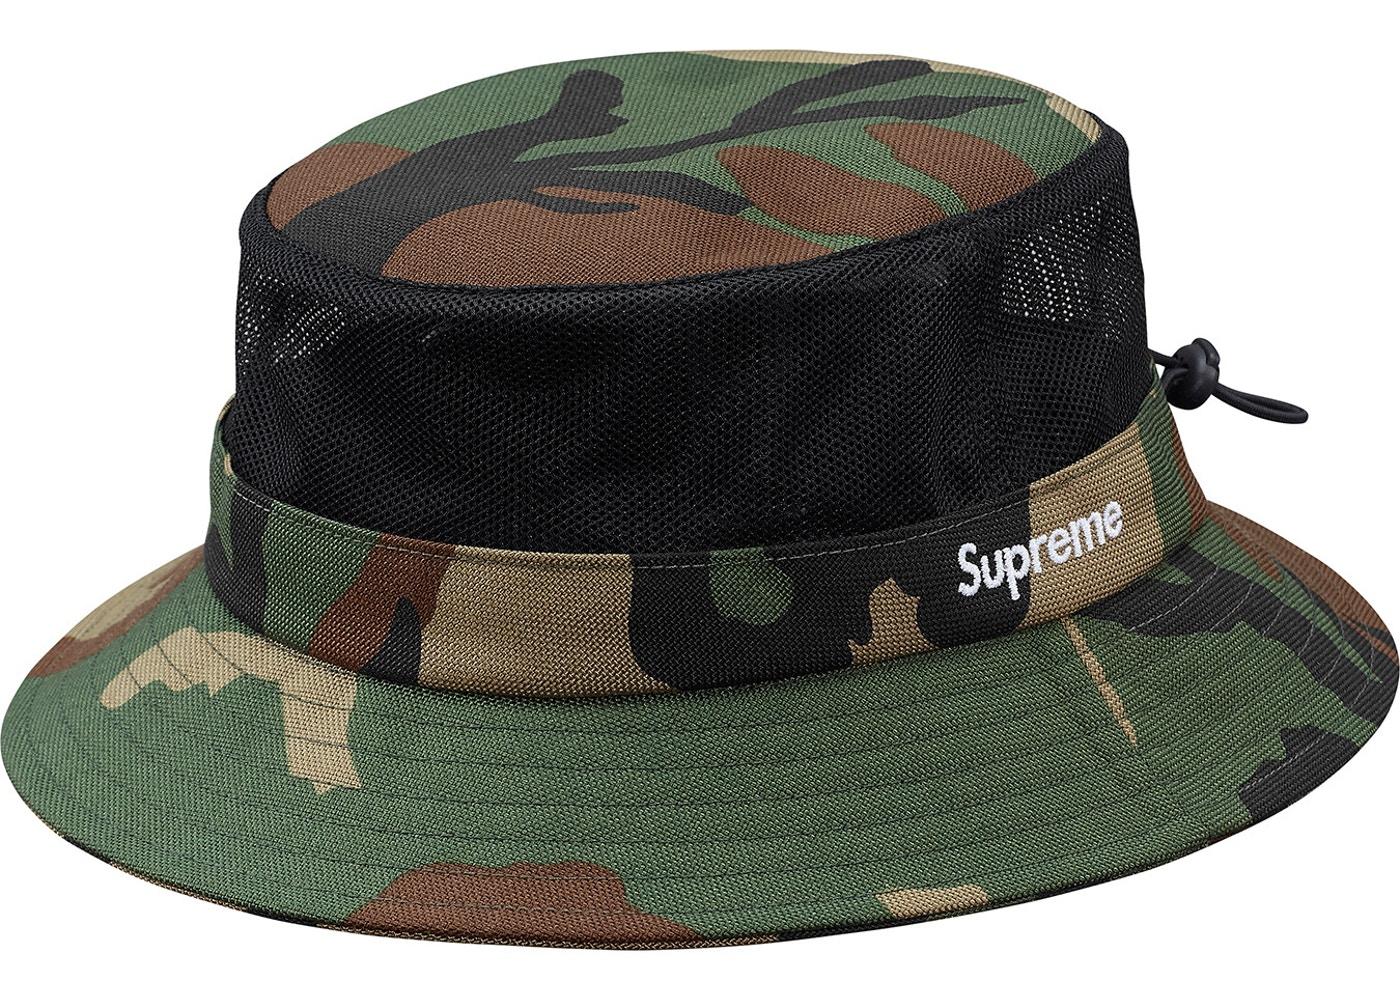 supreme bucket hat